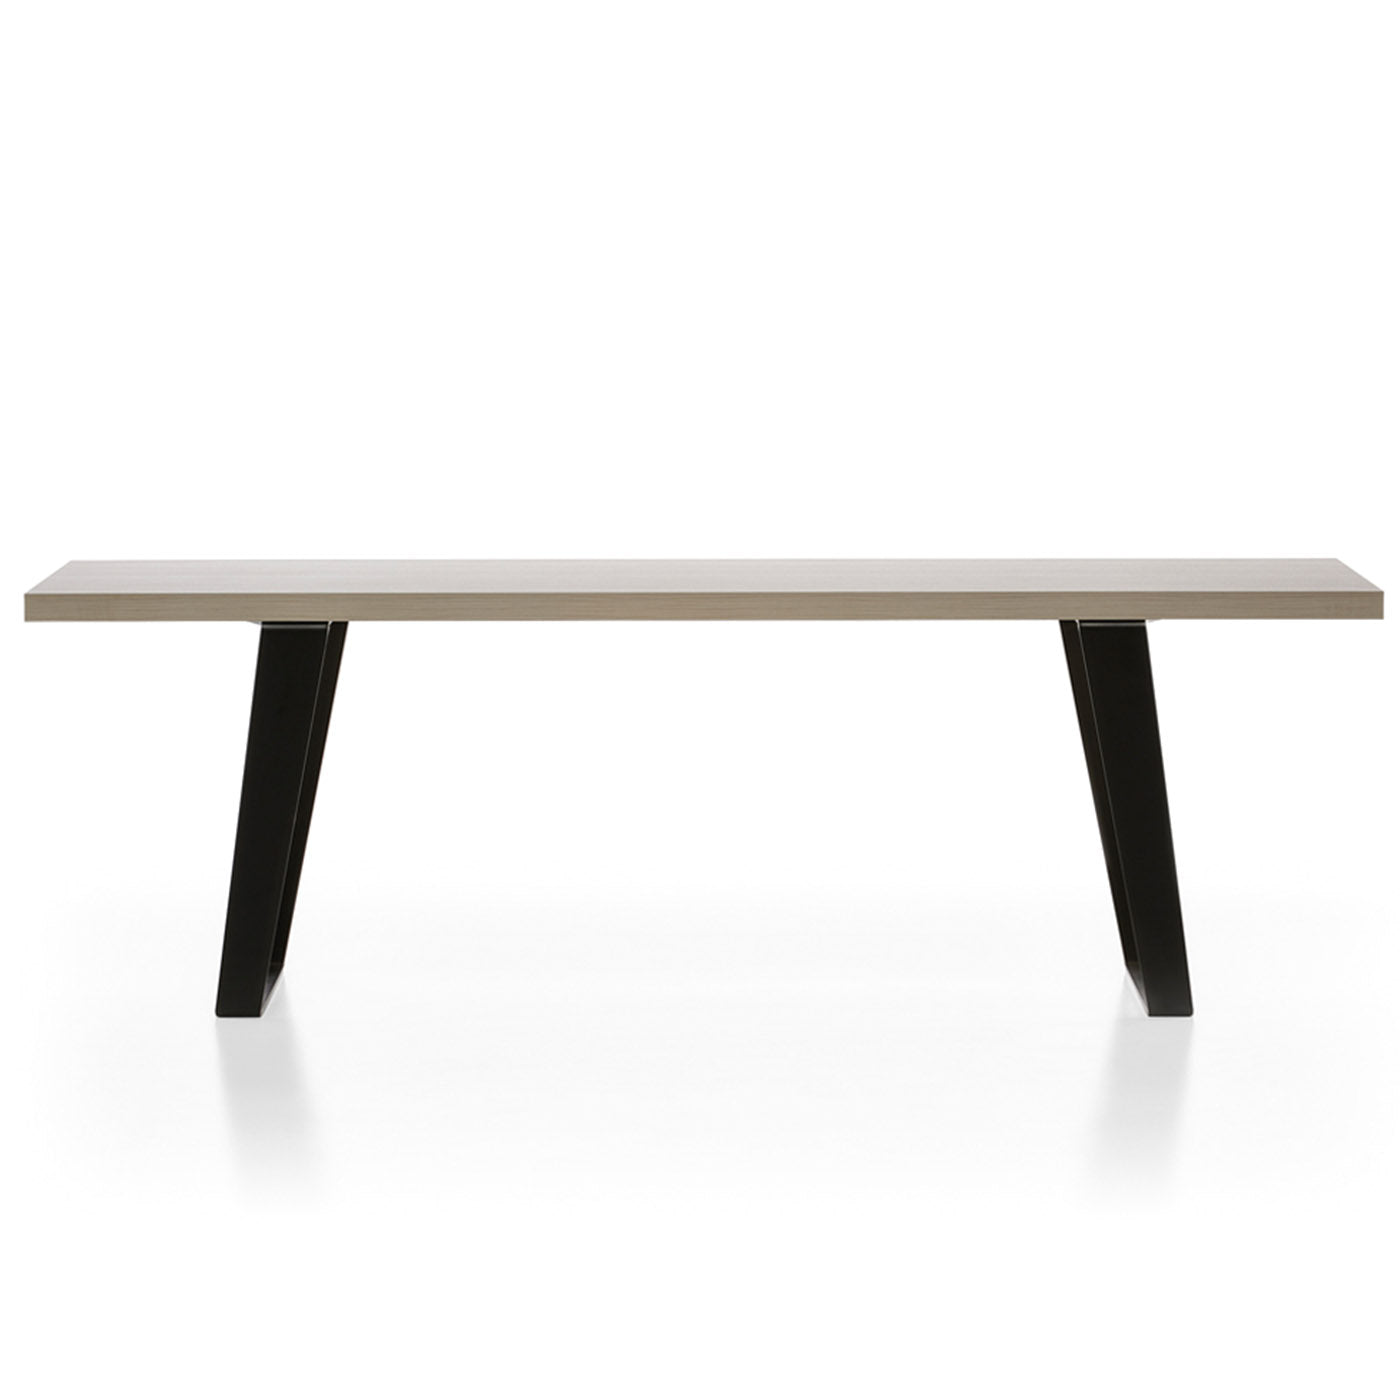 Japan Rectangular Steel Table by Franco Poli - Alternative view 2